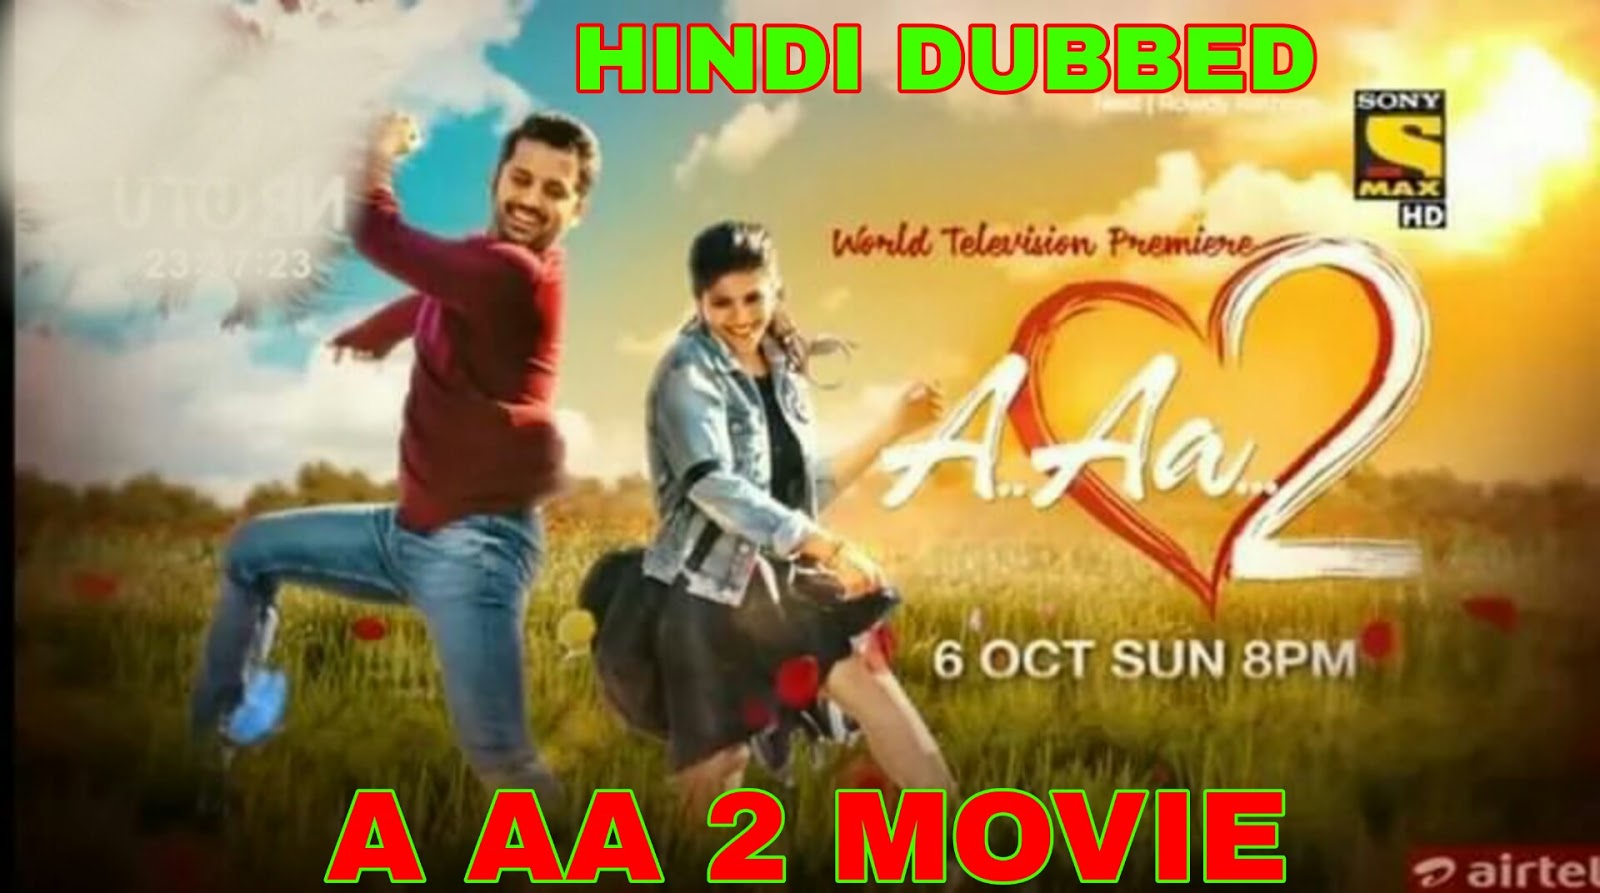 A Aa 2 Hindi Dubbed Full Movie Download 720p hd Filmywap, Filmyzilla, Mp4moviez